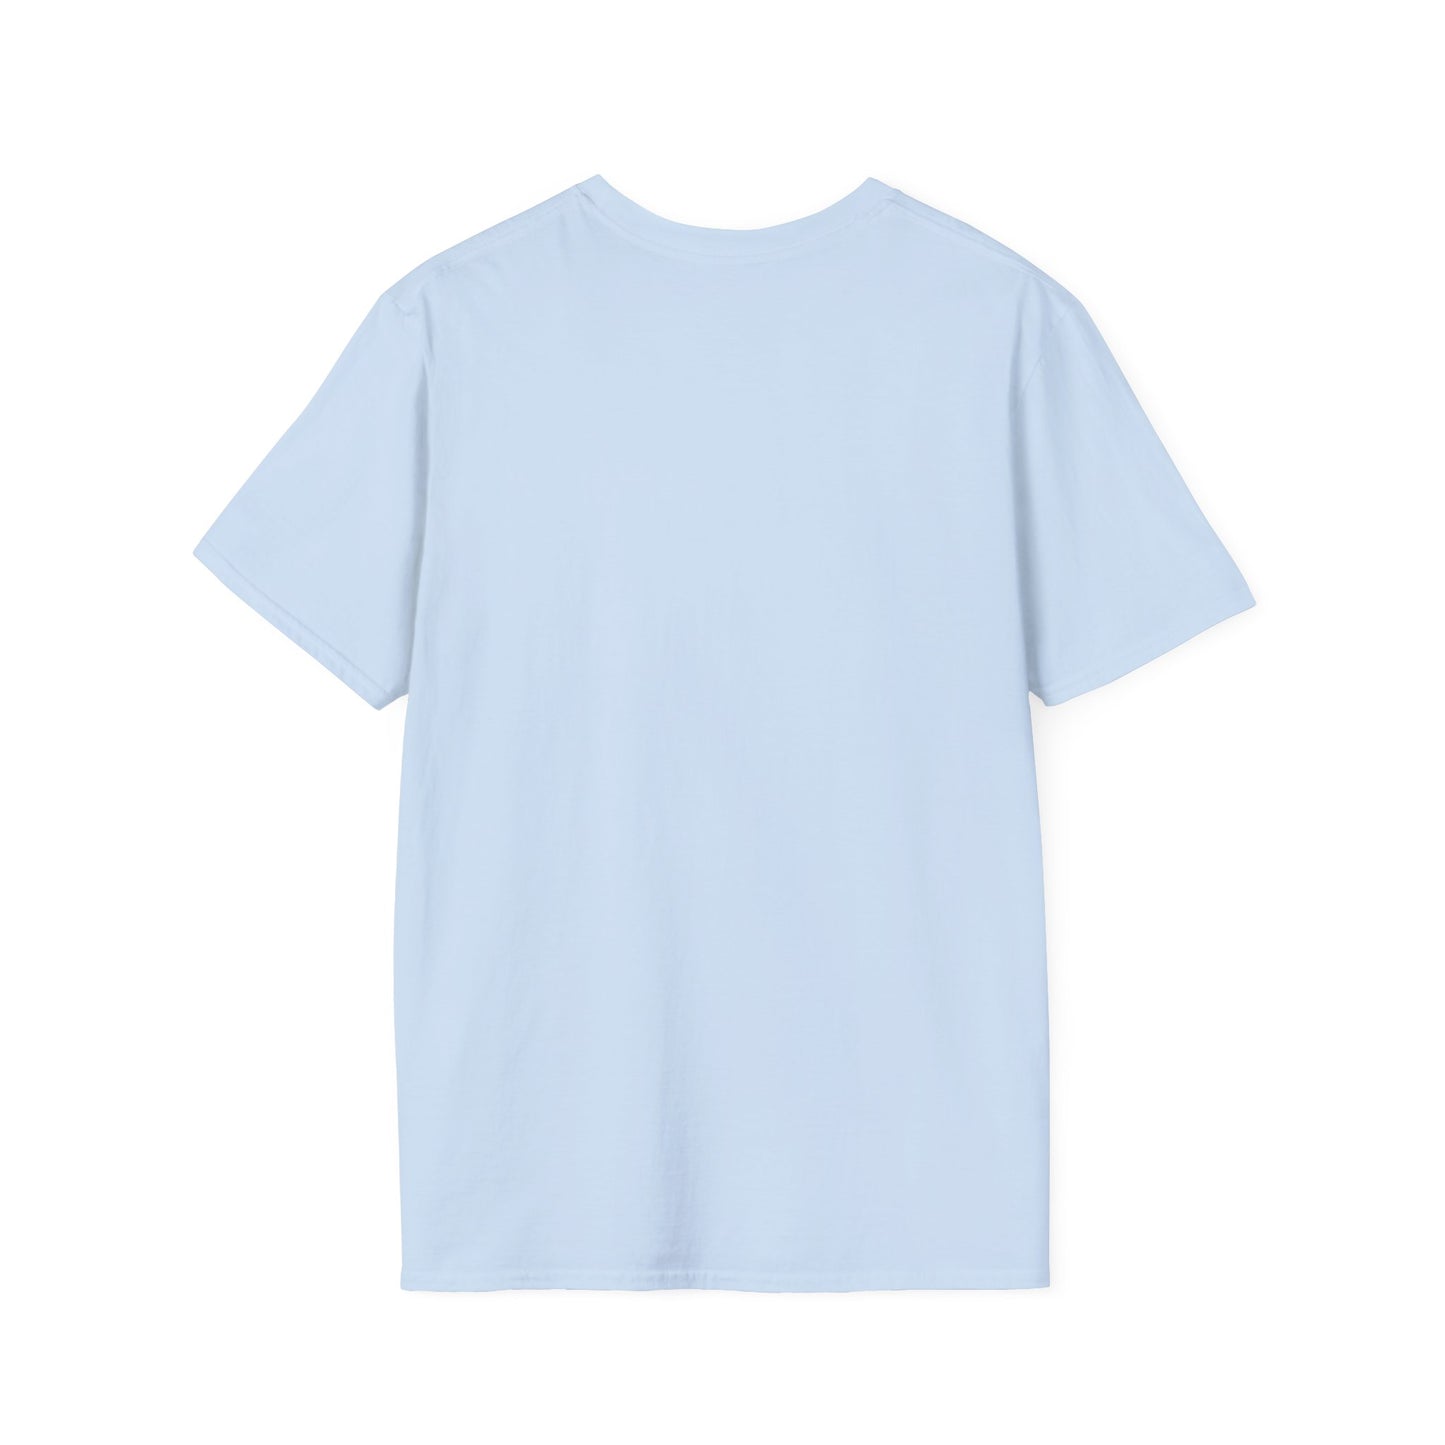 Unisex Softstyle T-Shirt - T-Ball Mom